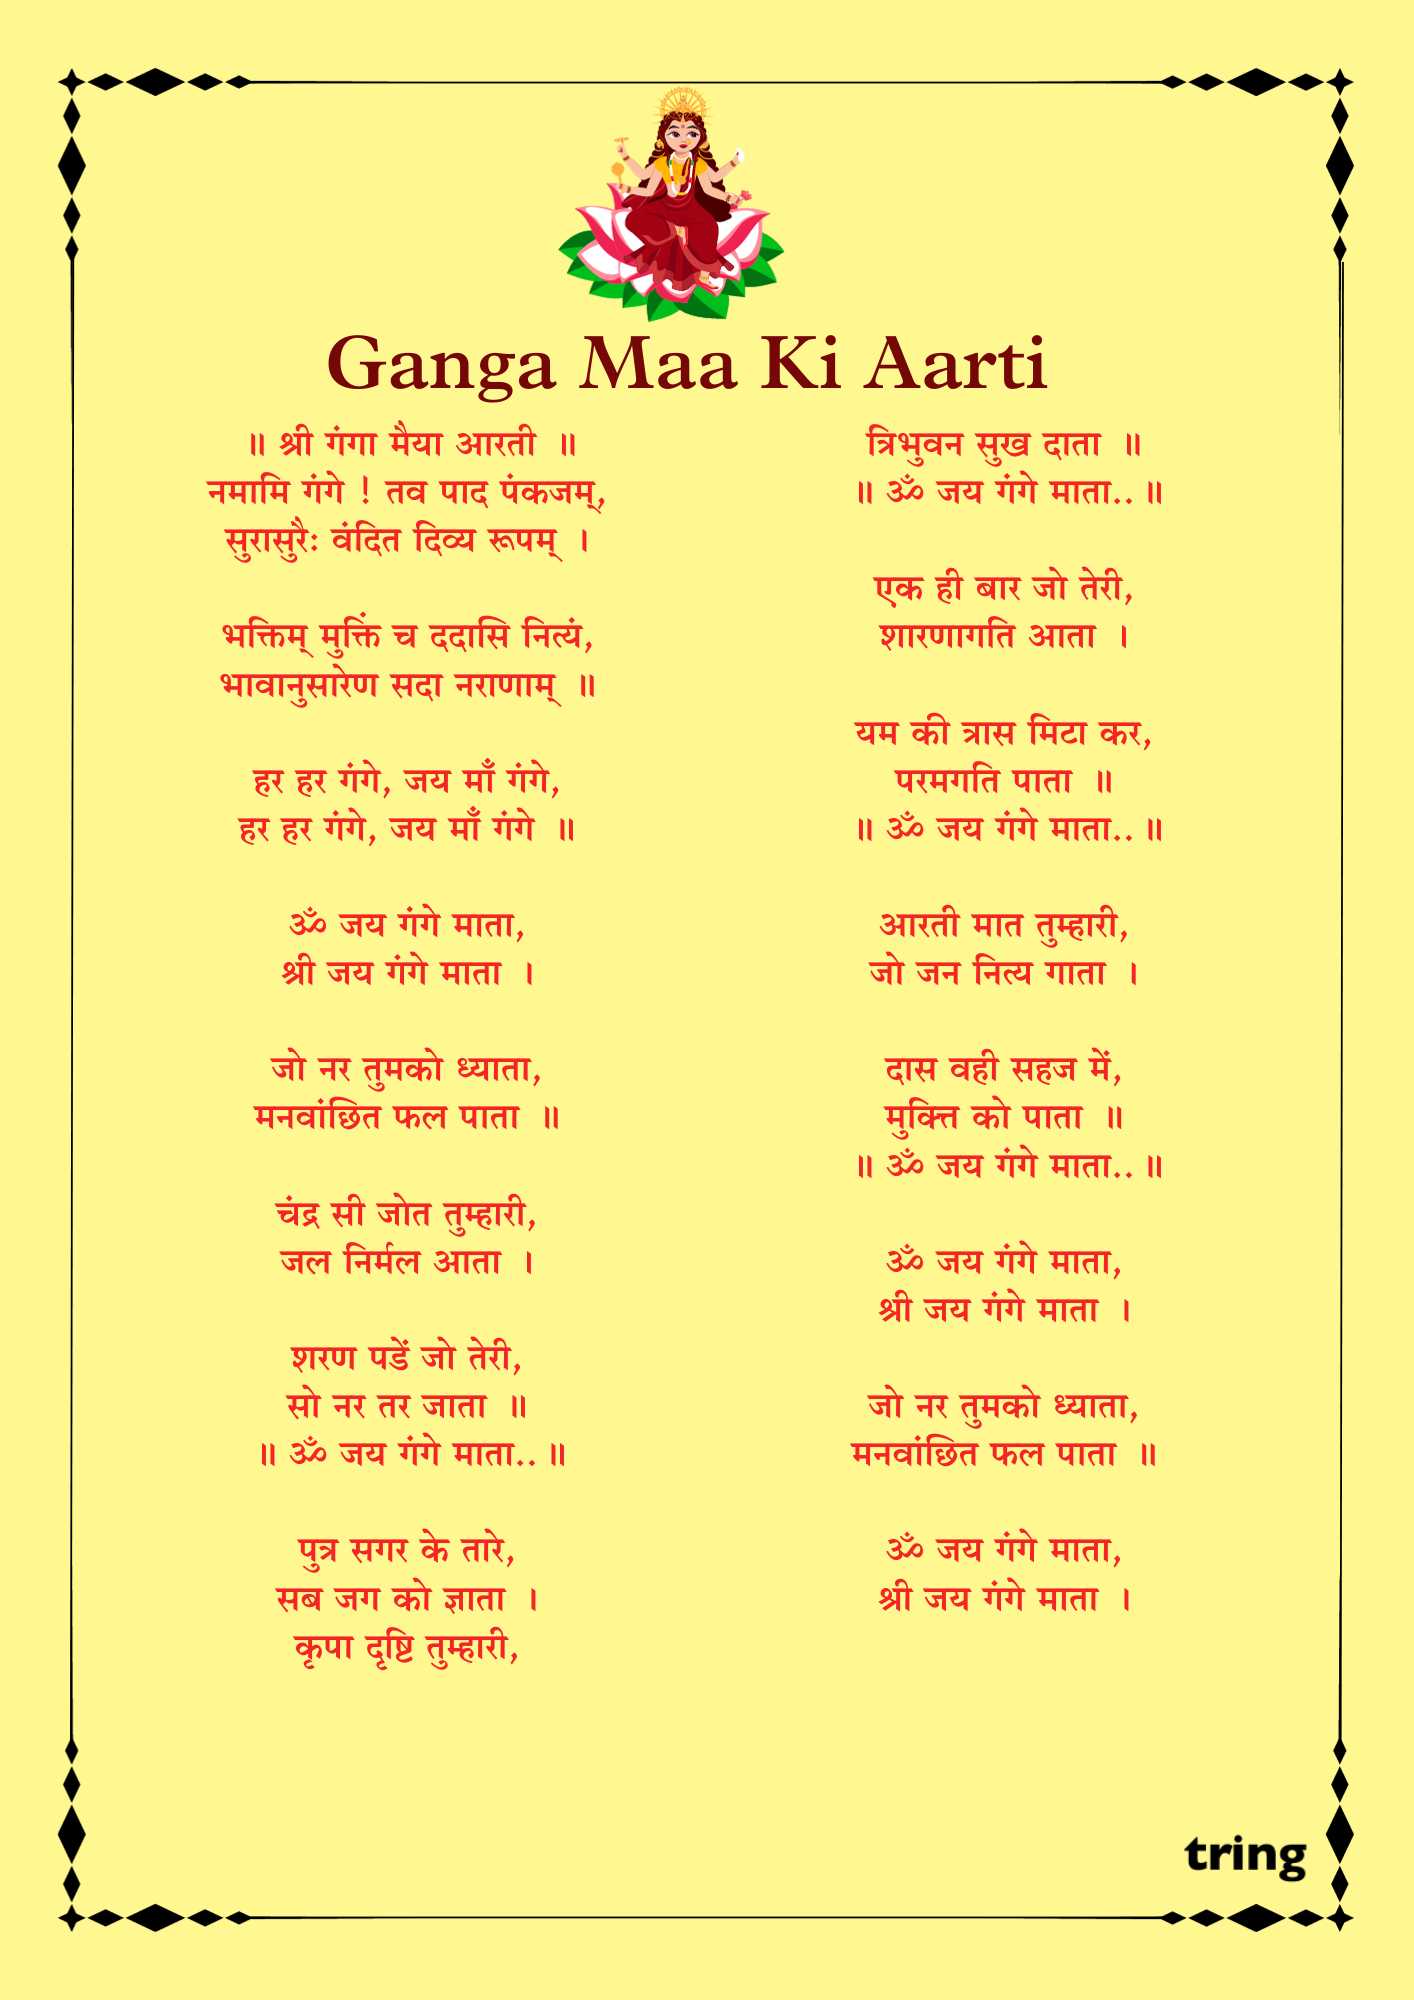 Ganga Maa Ki Aarti Images